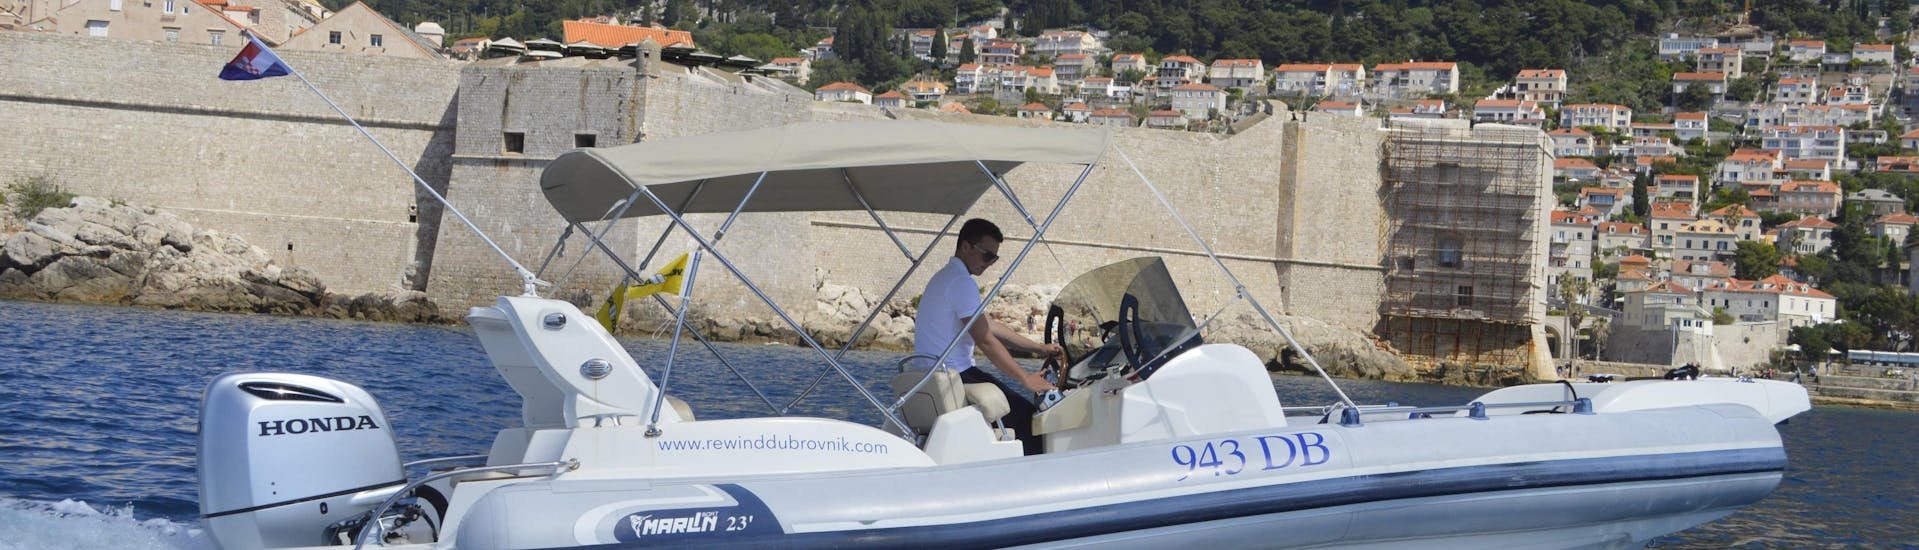 Private Bootstour zur Insel Korčula.